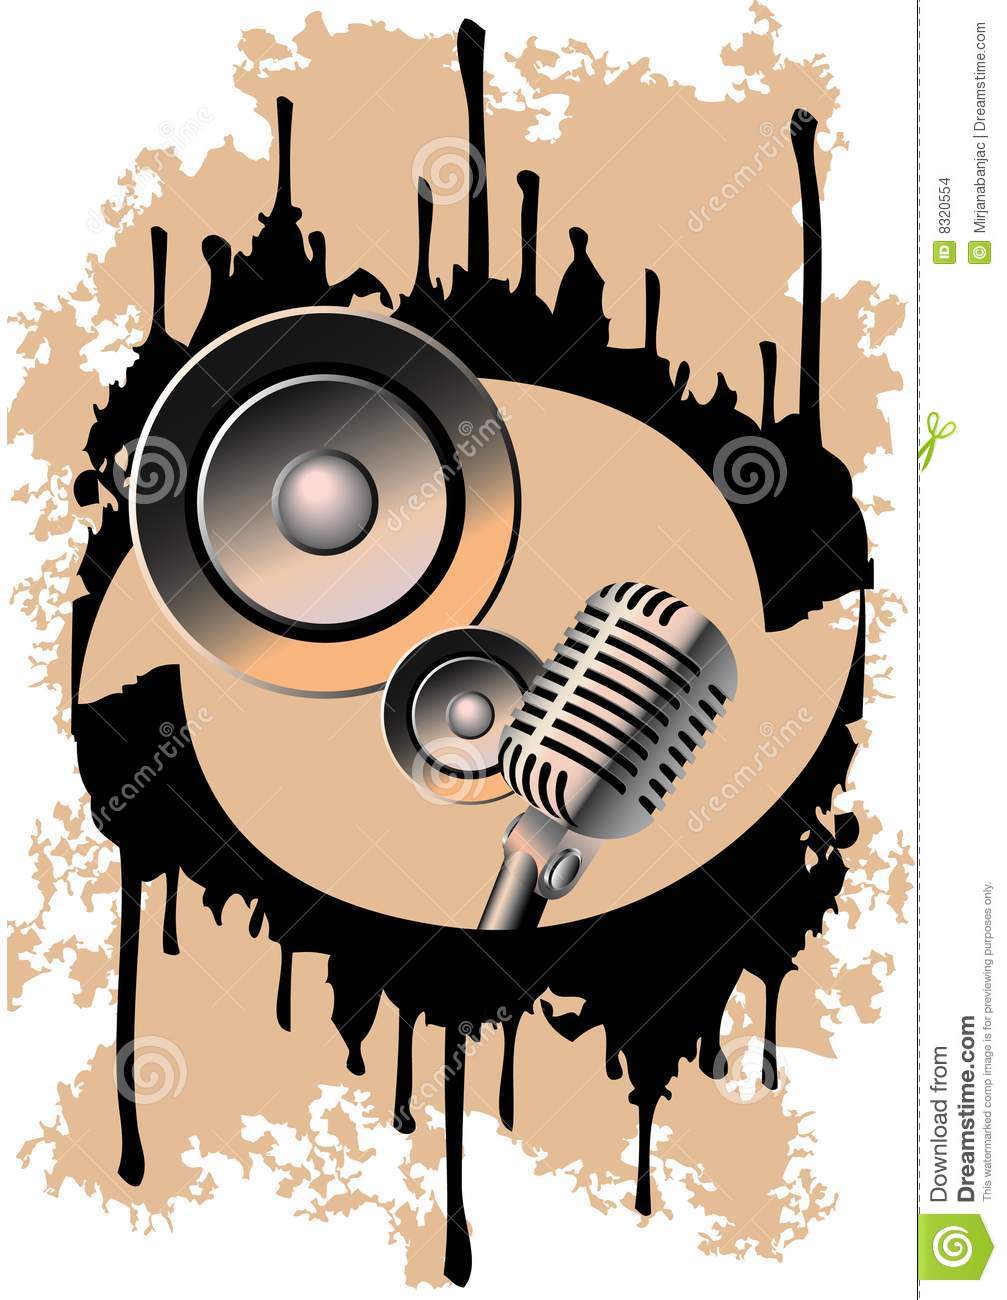 Speakers and Microphones Vector